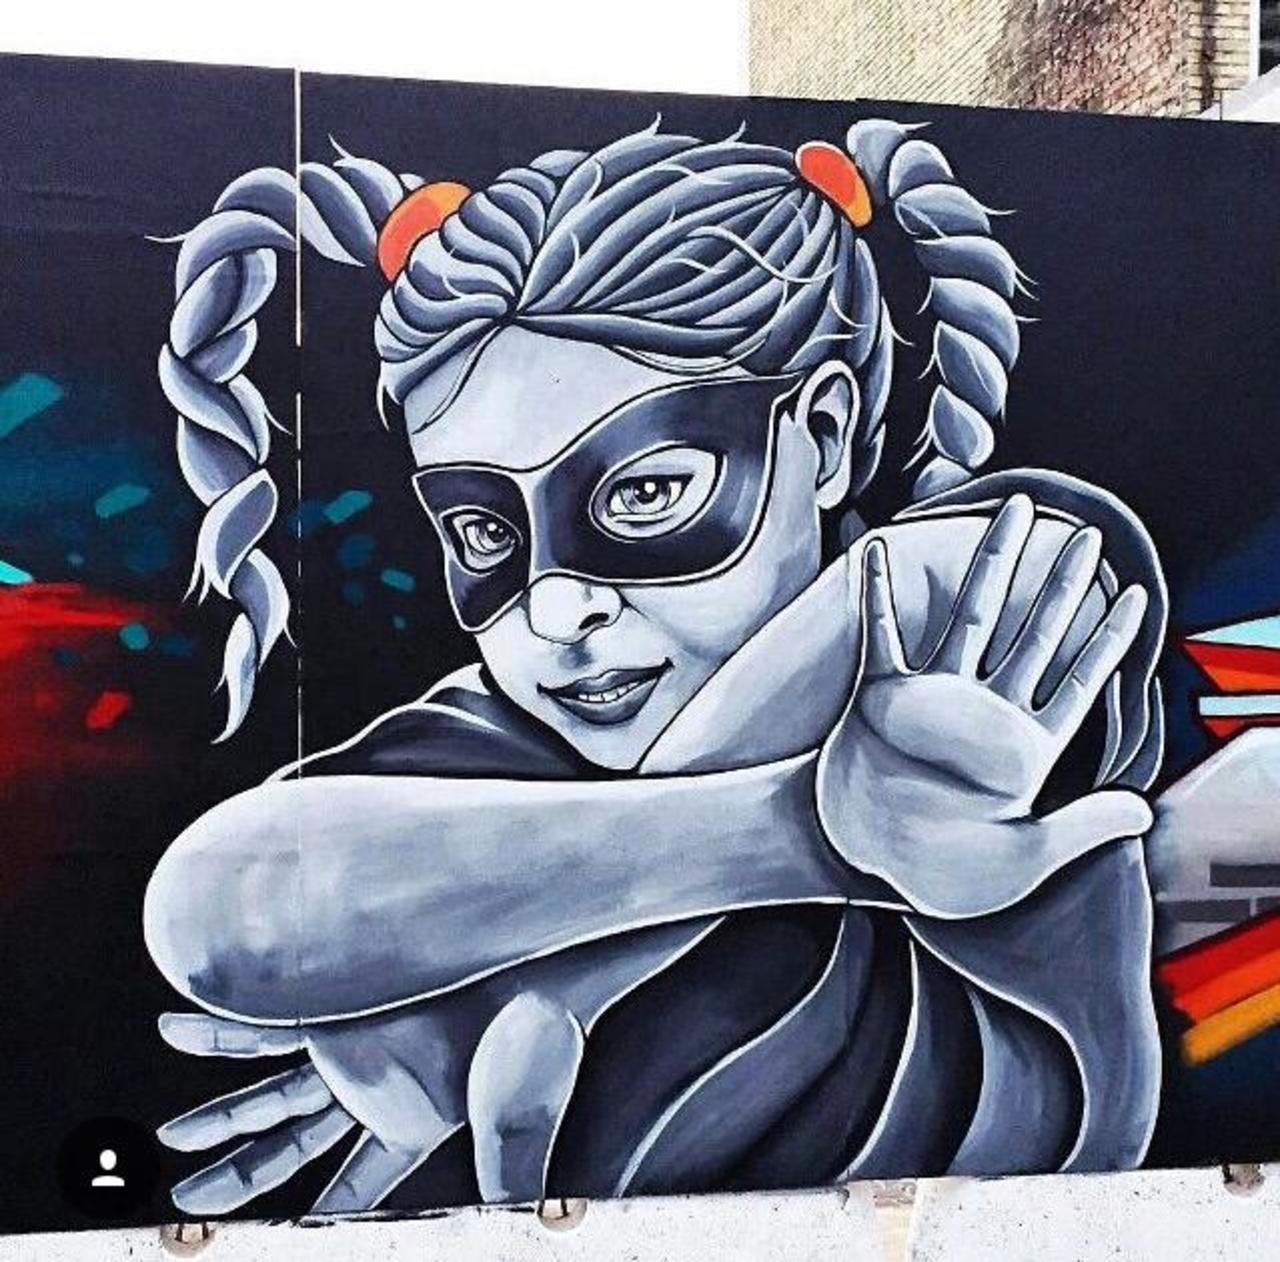 RT @charlesjackso14: Street Art by Stinehvid 

#art #graffiti #mural #streetart http://t.co/s6U7cPYmW2